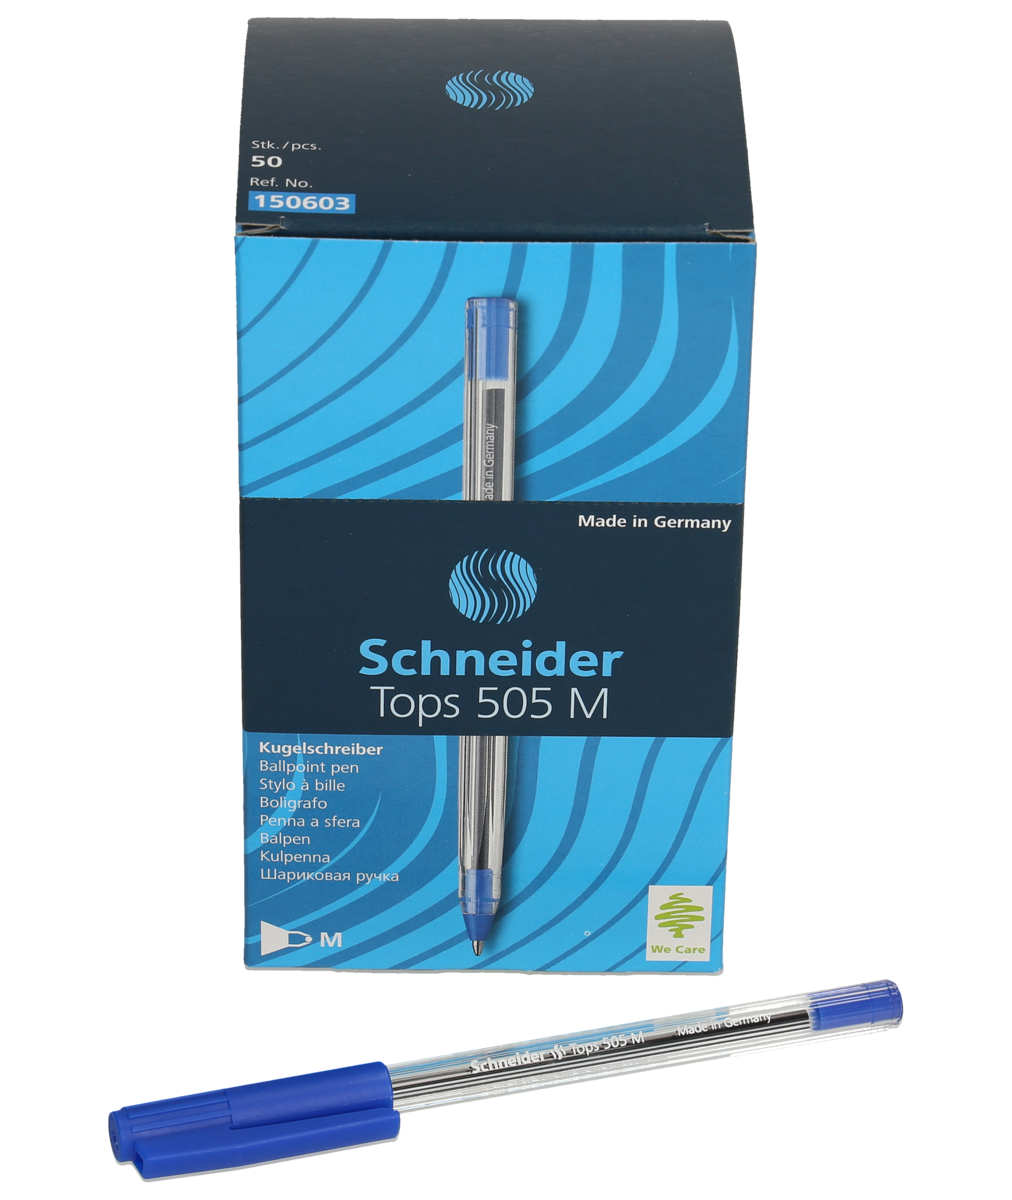 Schneider Stylo-bille Tops 505 M, bleu, 0.5 mm